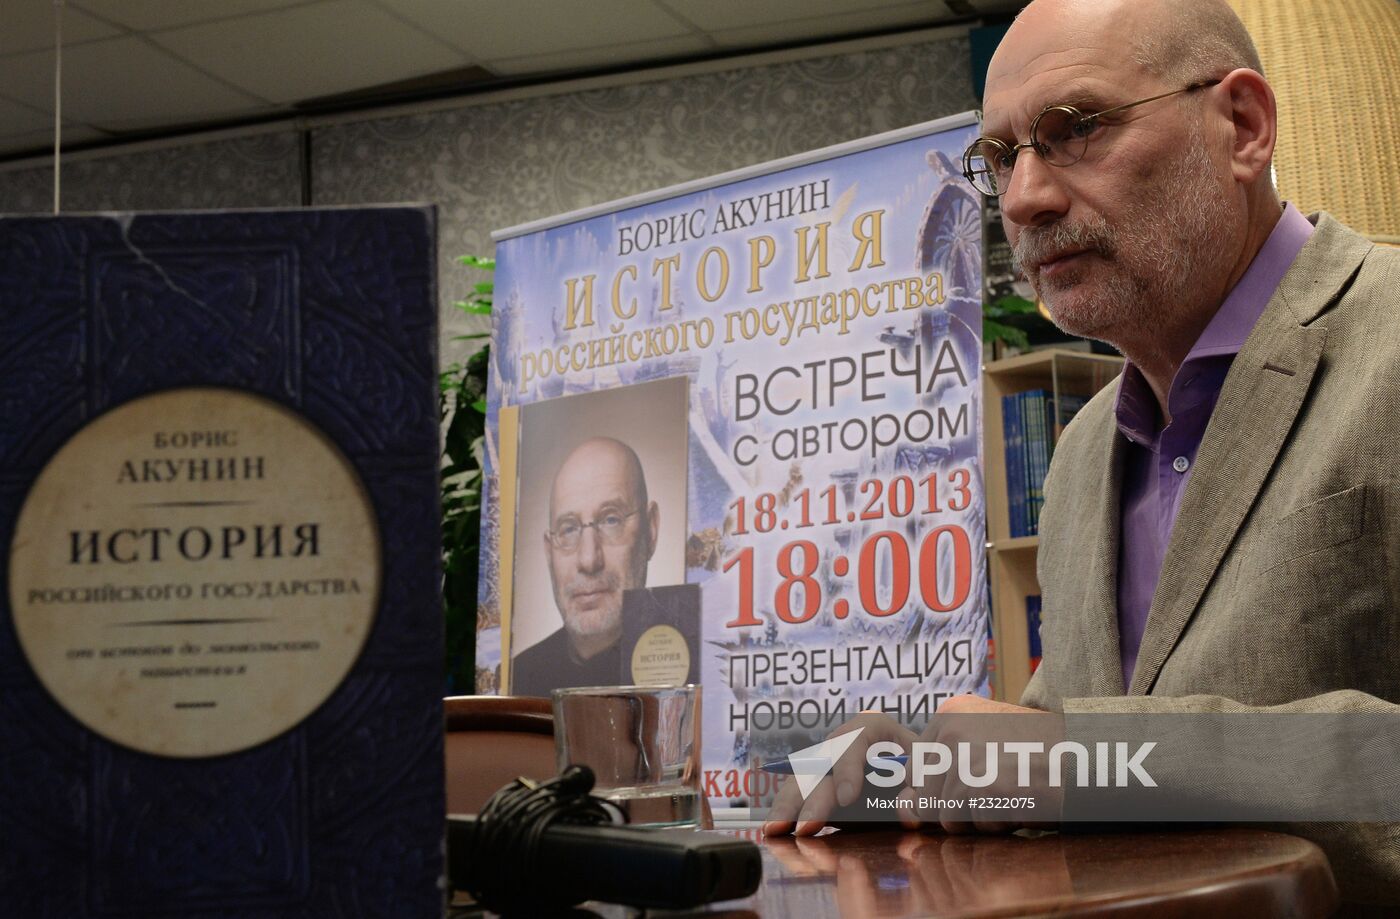 Presentation of Boris Akunin's book "History of the Russian State"